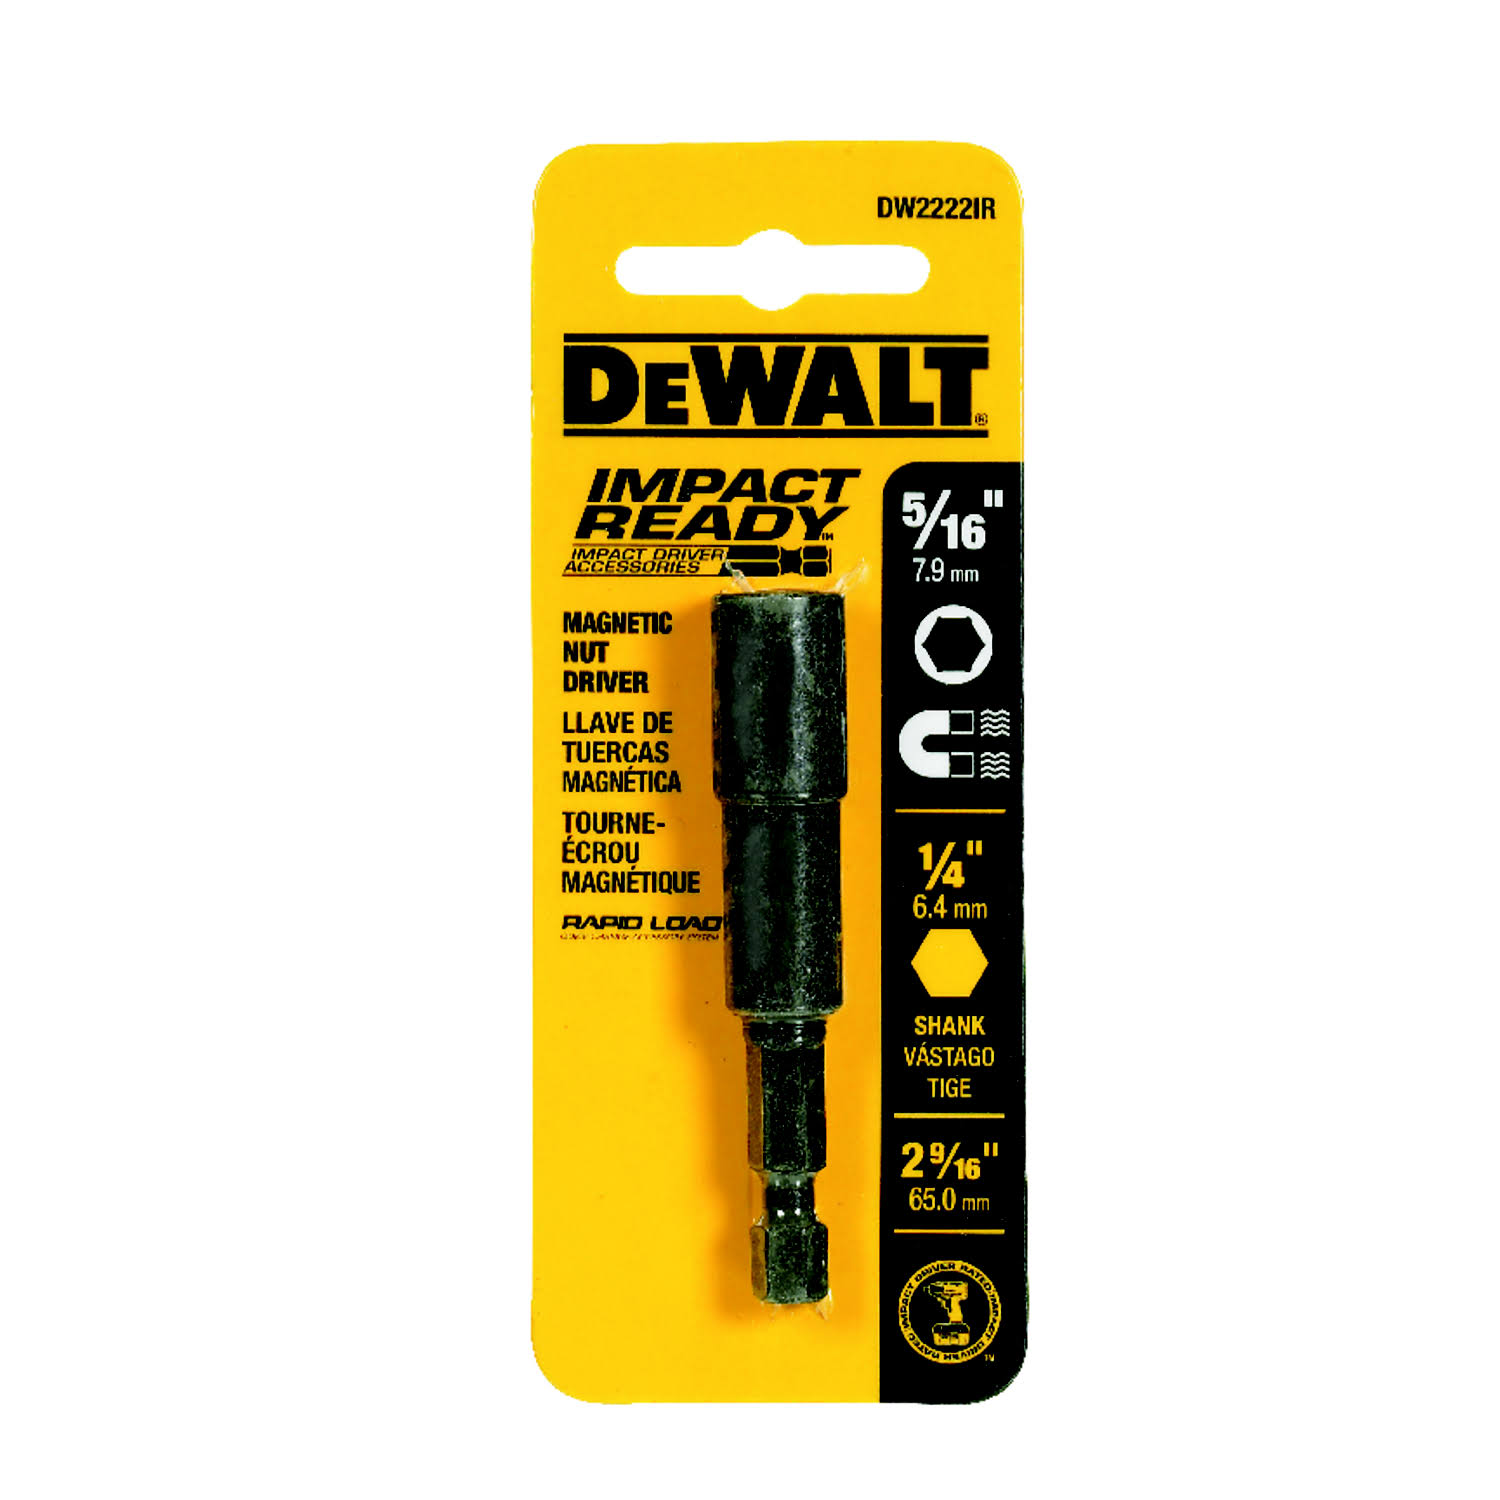 Dewalt Impact Ready Magnetic Nut Driver - 5/16" x 2-9/16"